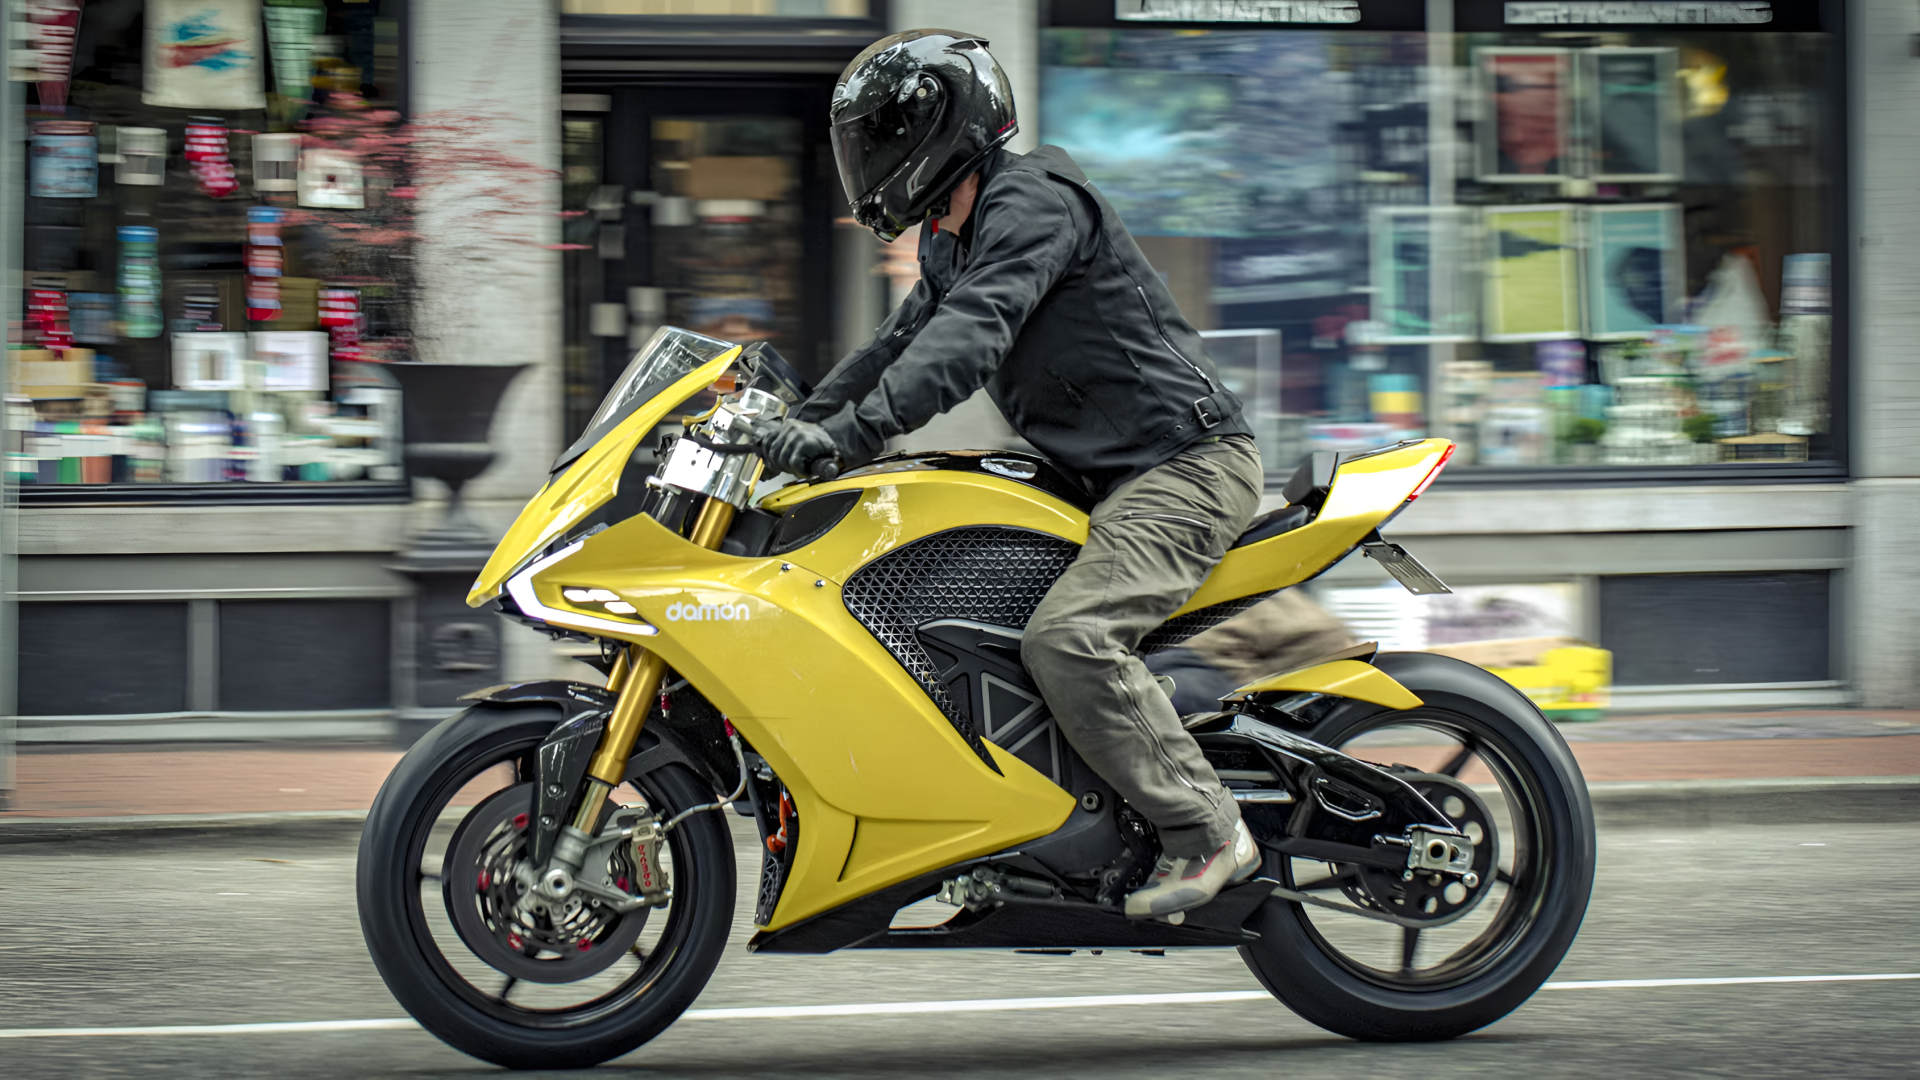 The 2021 Kawasaki Motorcycle Lineup + Our Take On Each Model - webBikeWorld